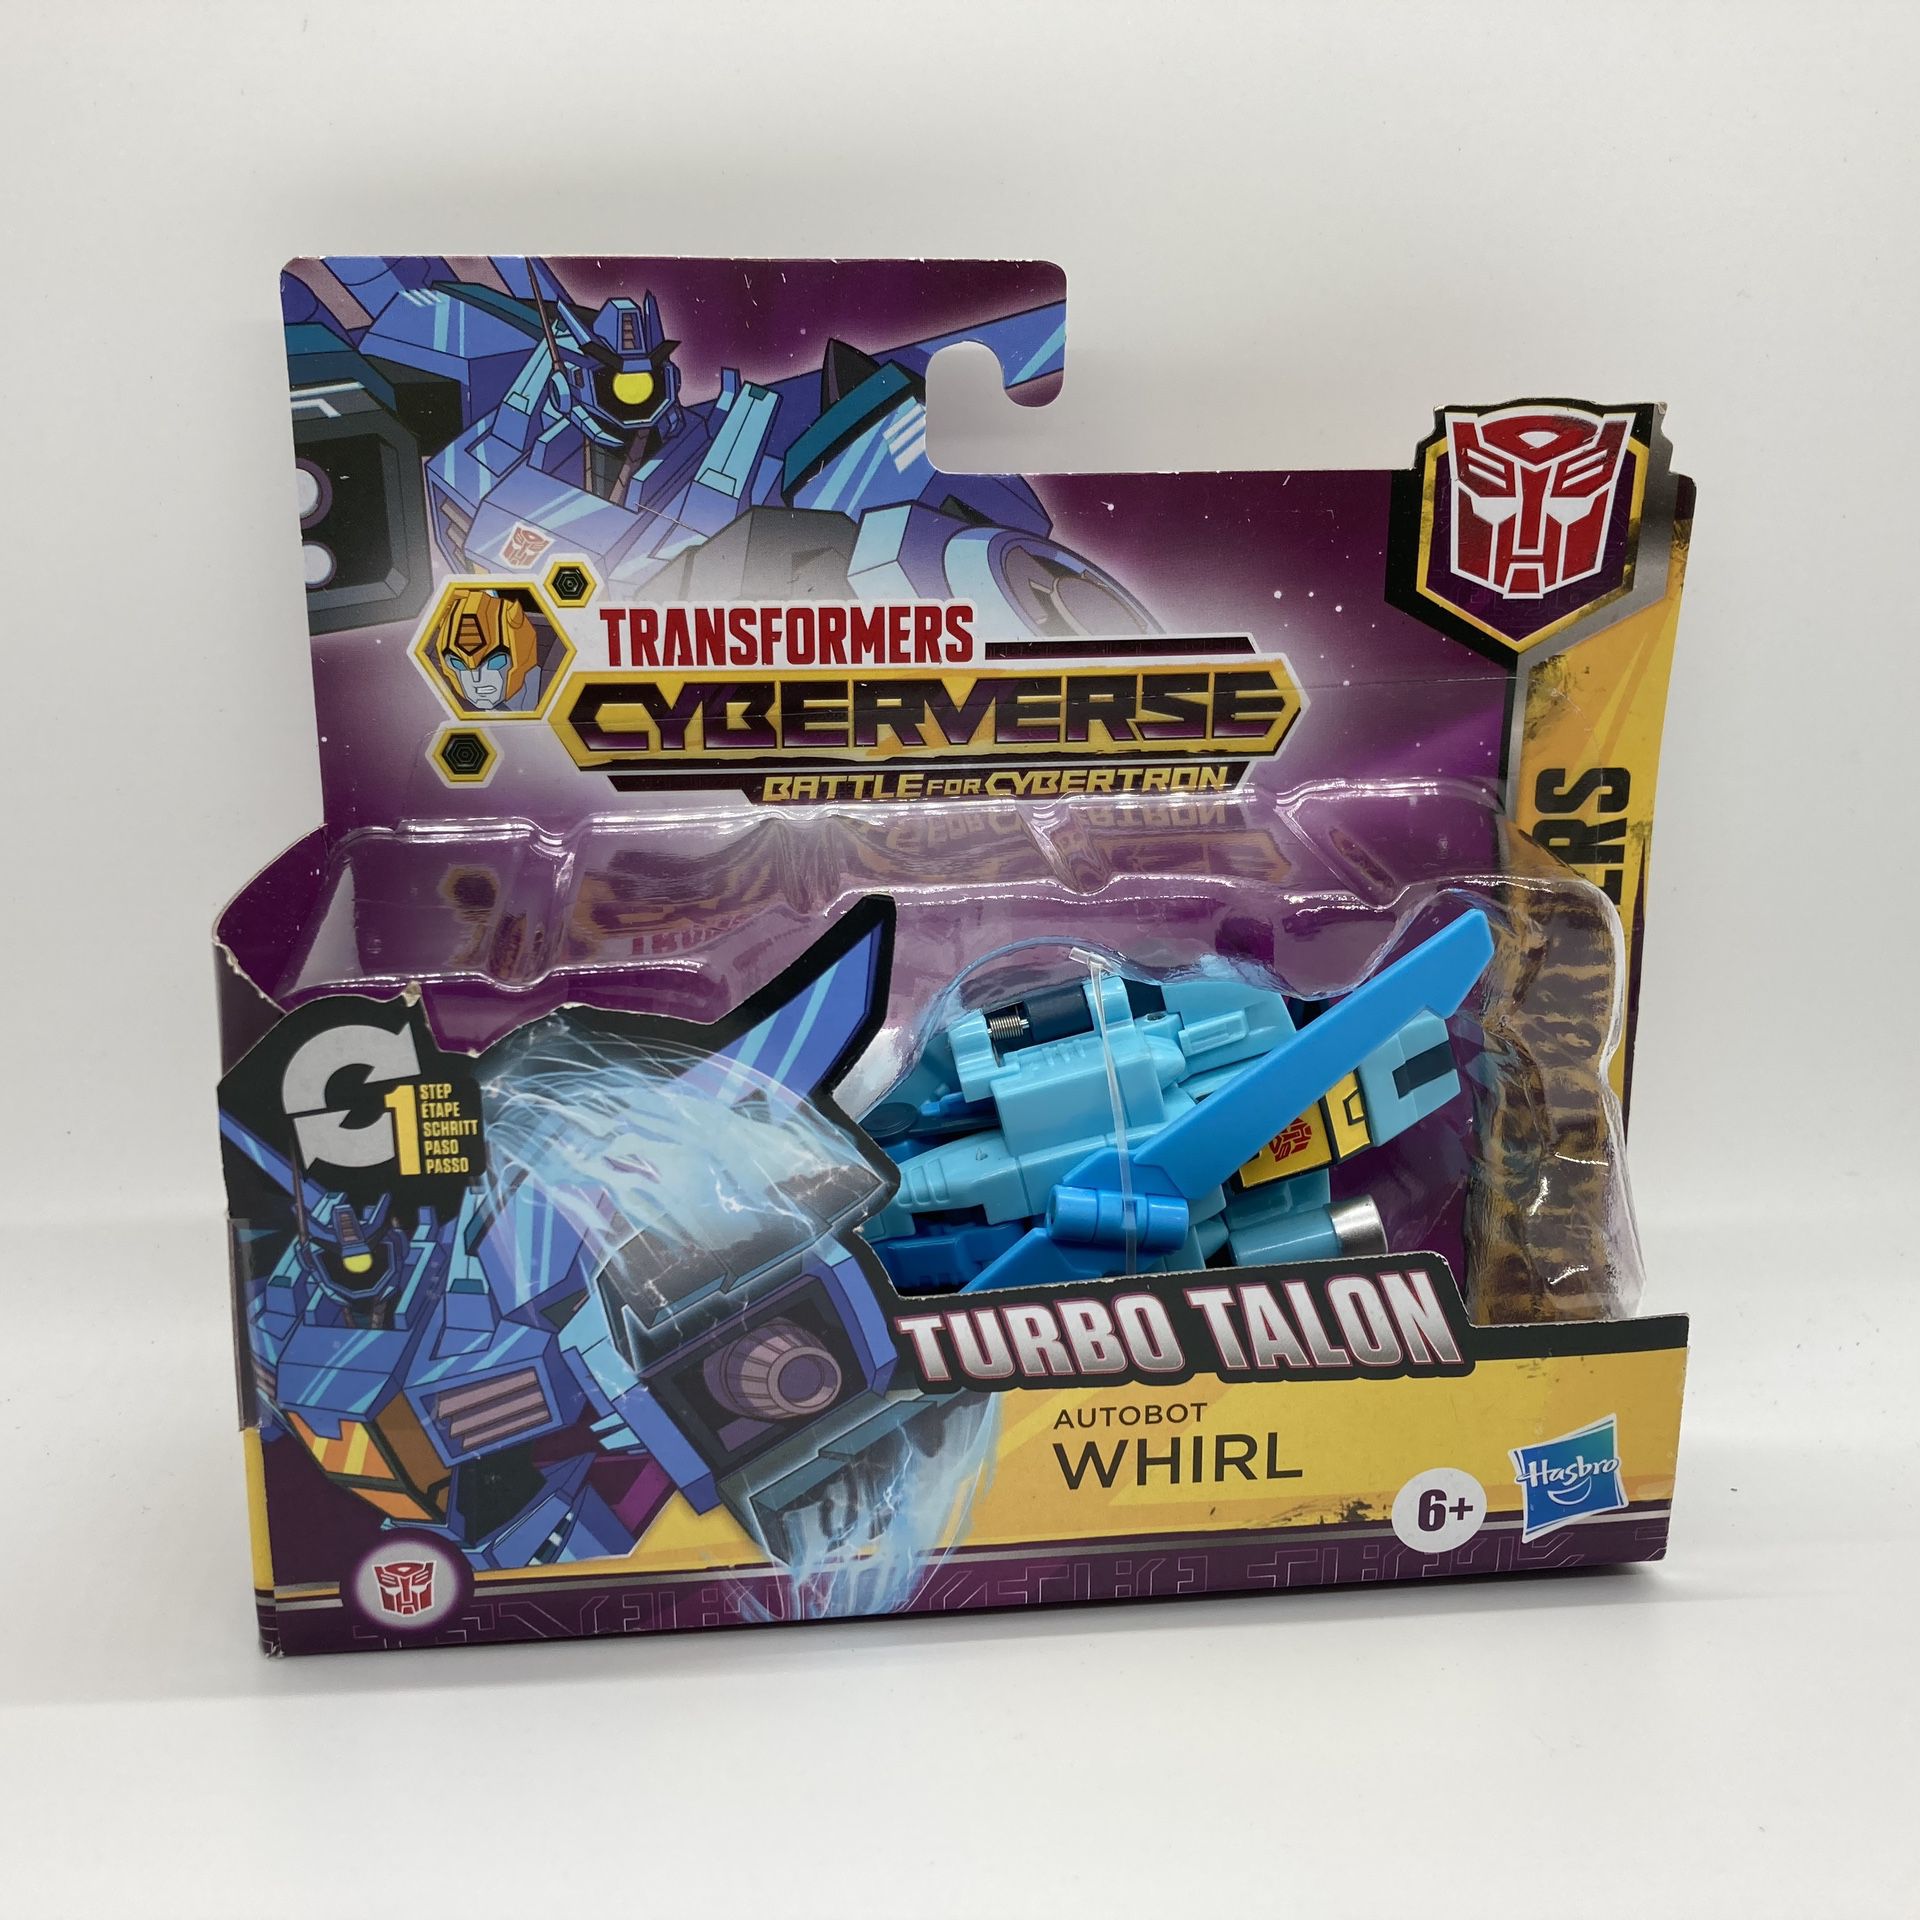 NEW Transformers Autobot Whirl Turbo Talon Action Figure Toy Hasbro